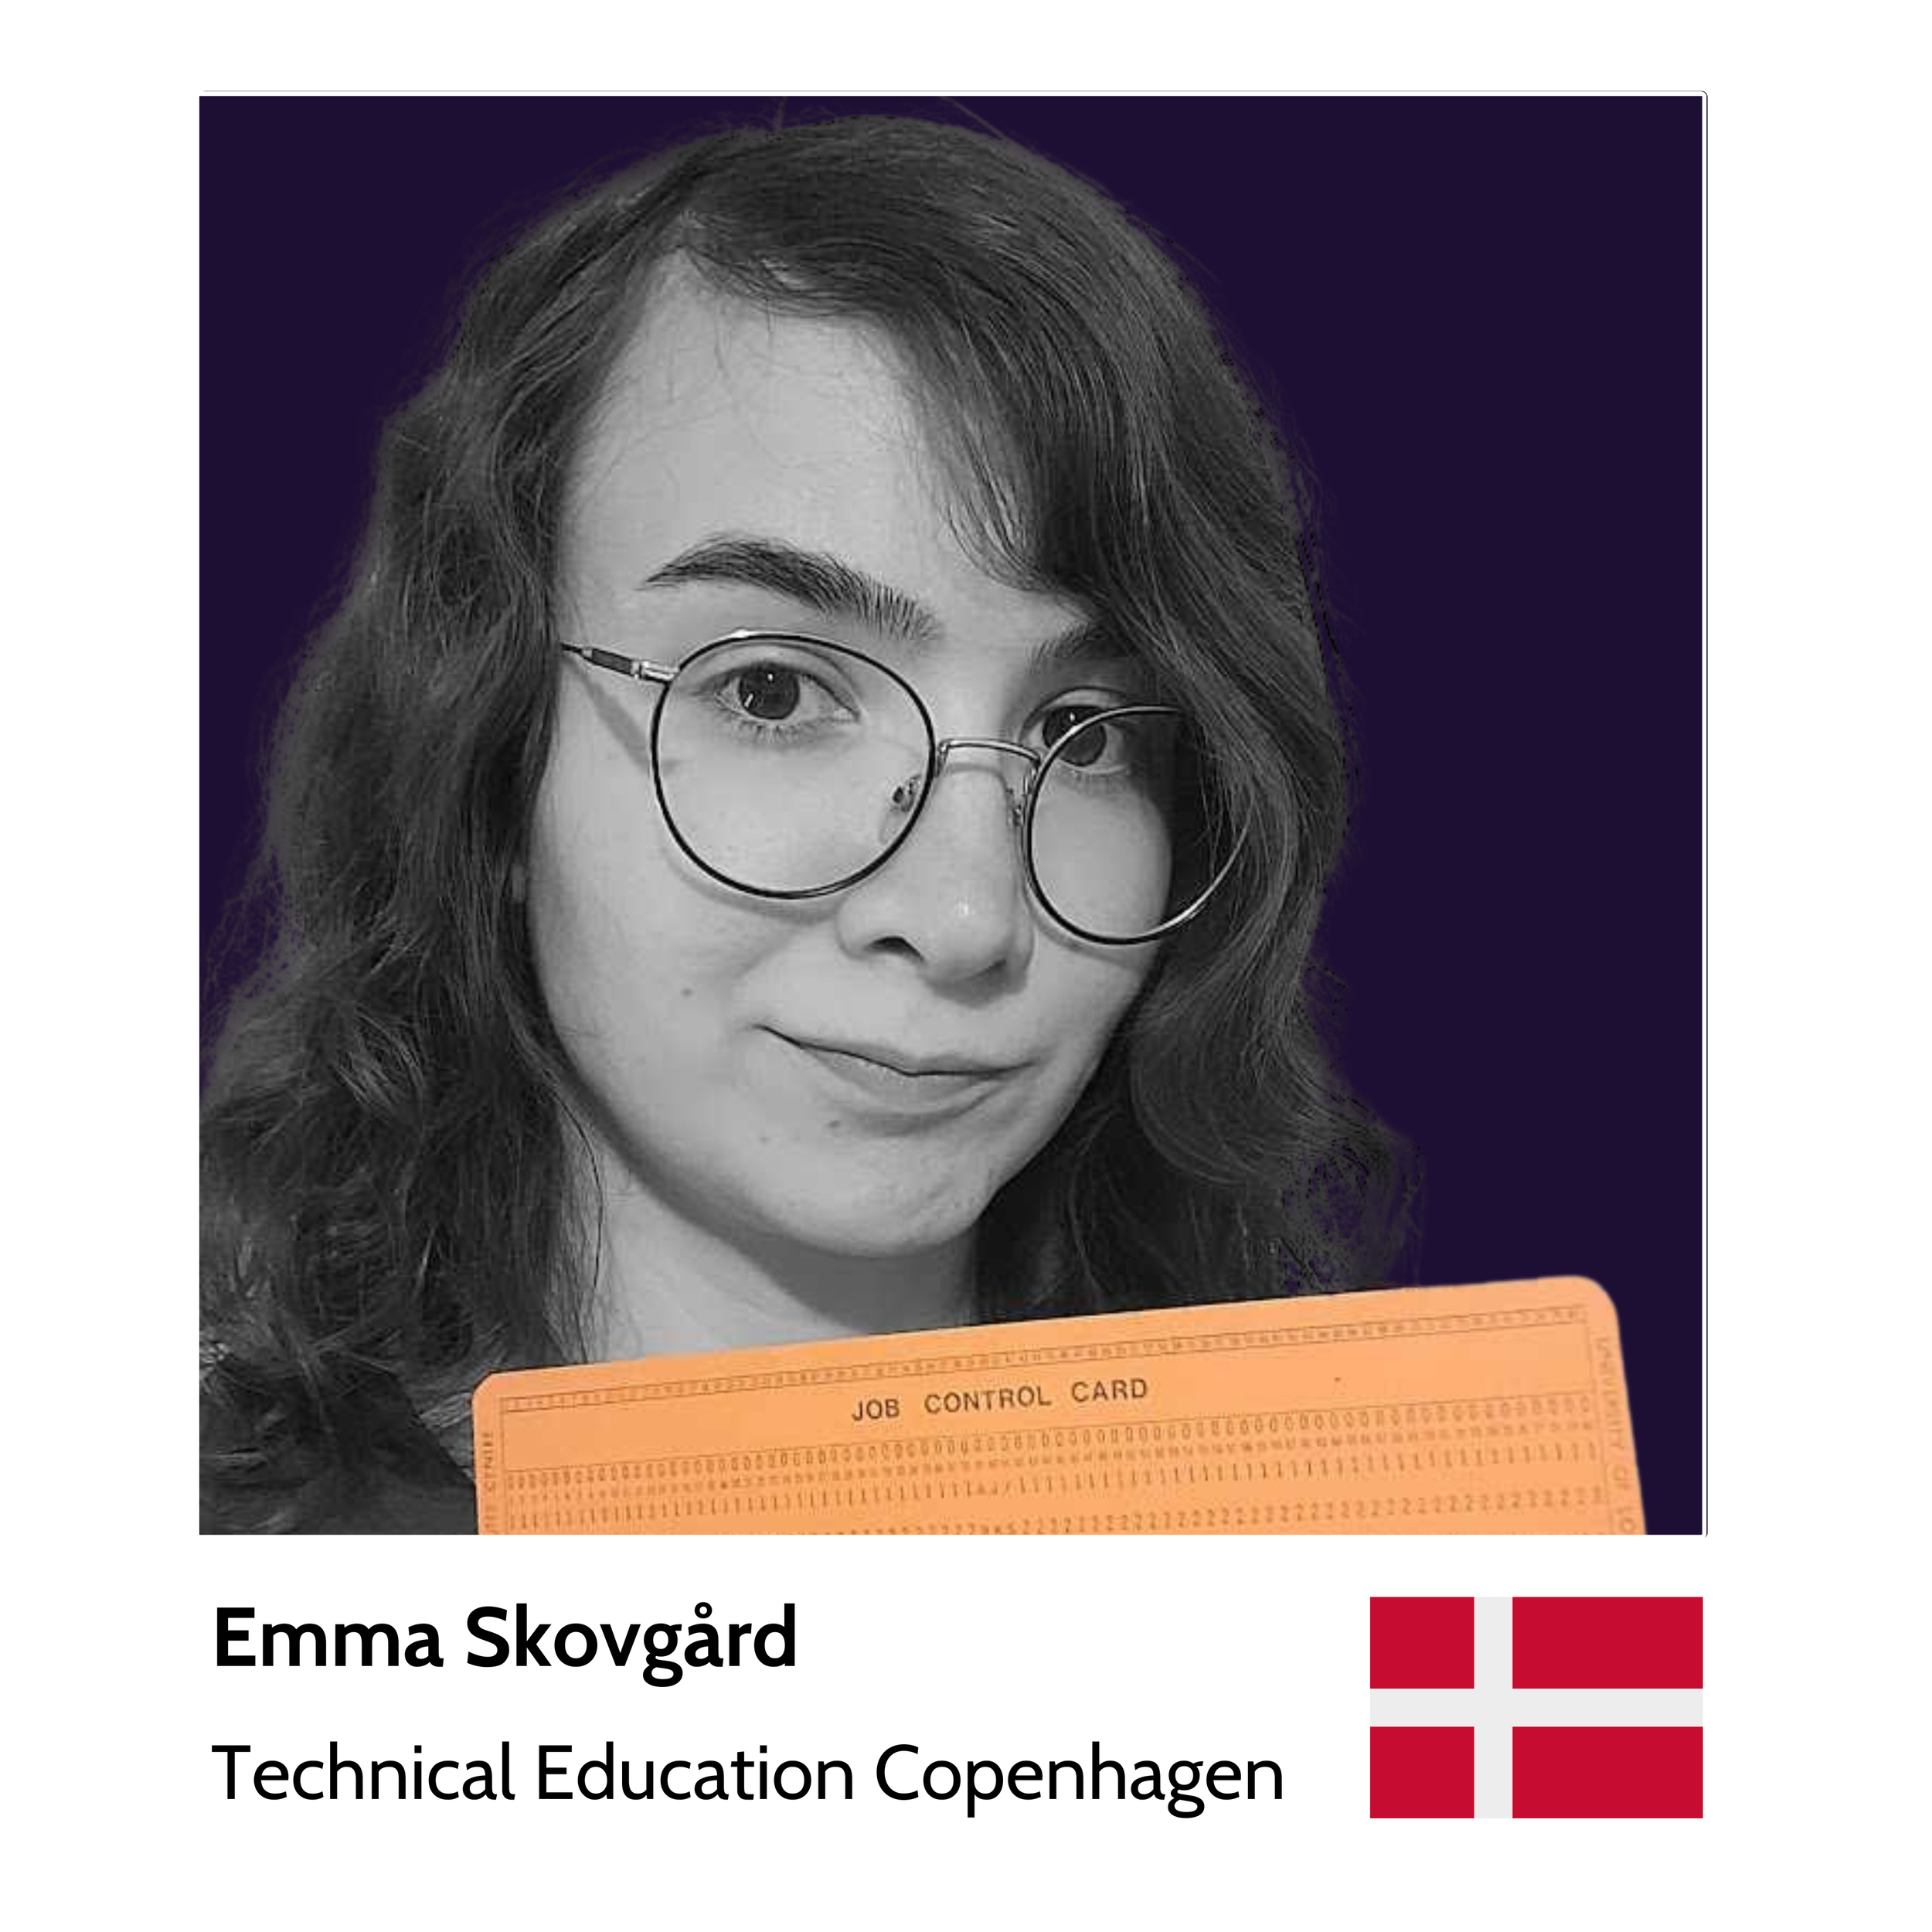 Your_Big_Year_ibm_z_student_ambassador_Emma Skovgård_Technical Education Copenhagen.png